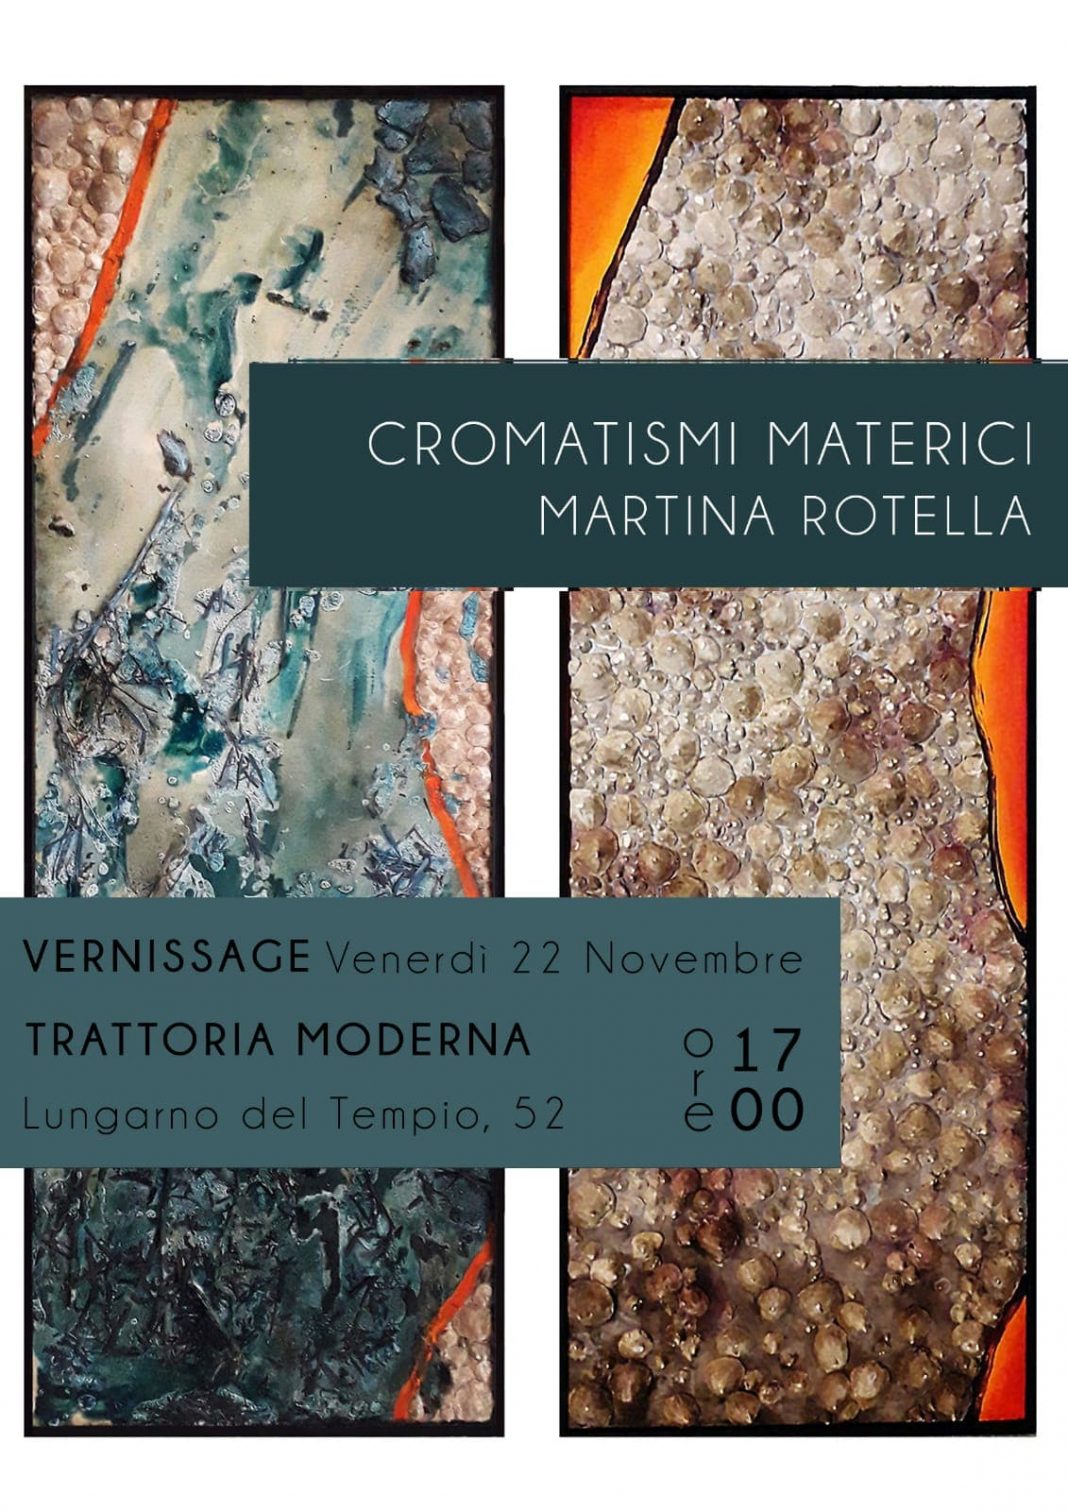 Martina Rotella – Cromatismi Matericihttps://www.exibart.com/repository/media/formidable/11/MartinaRotellaMostra-1068x1511.jpg